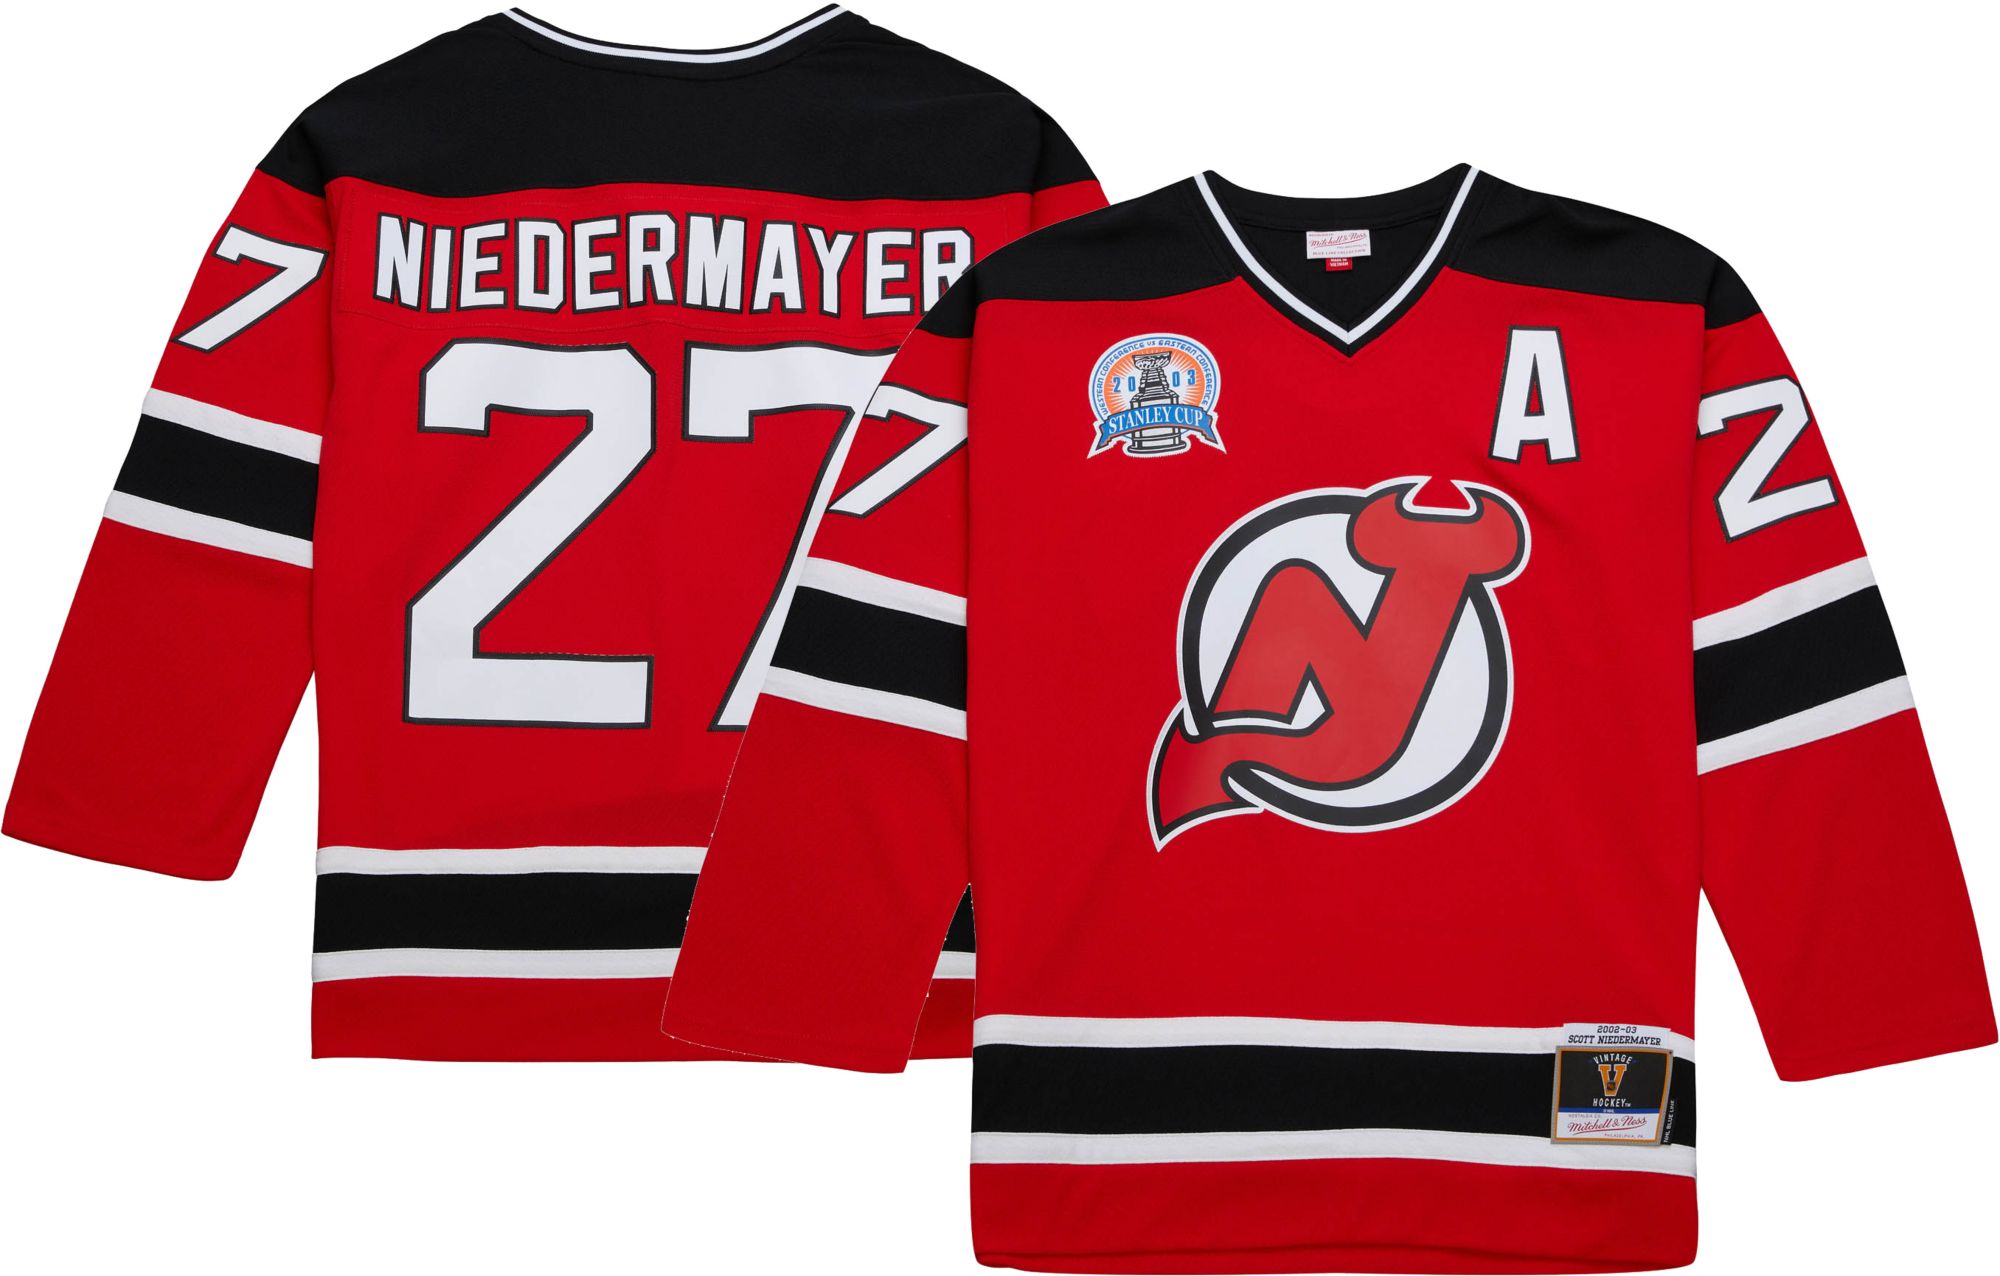 new new jersey devils uniform